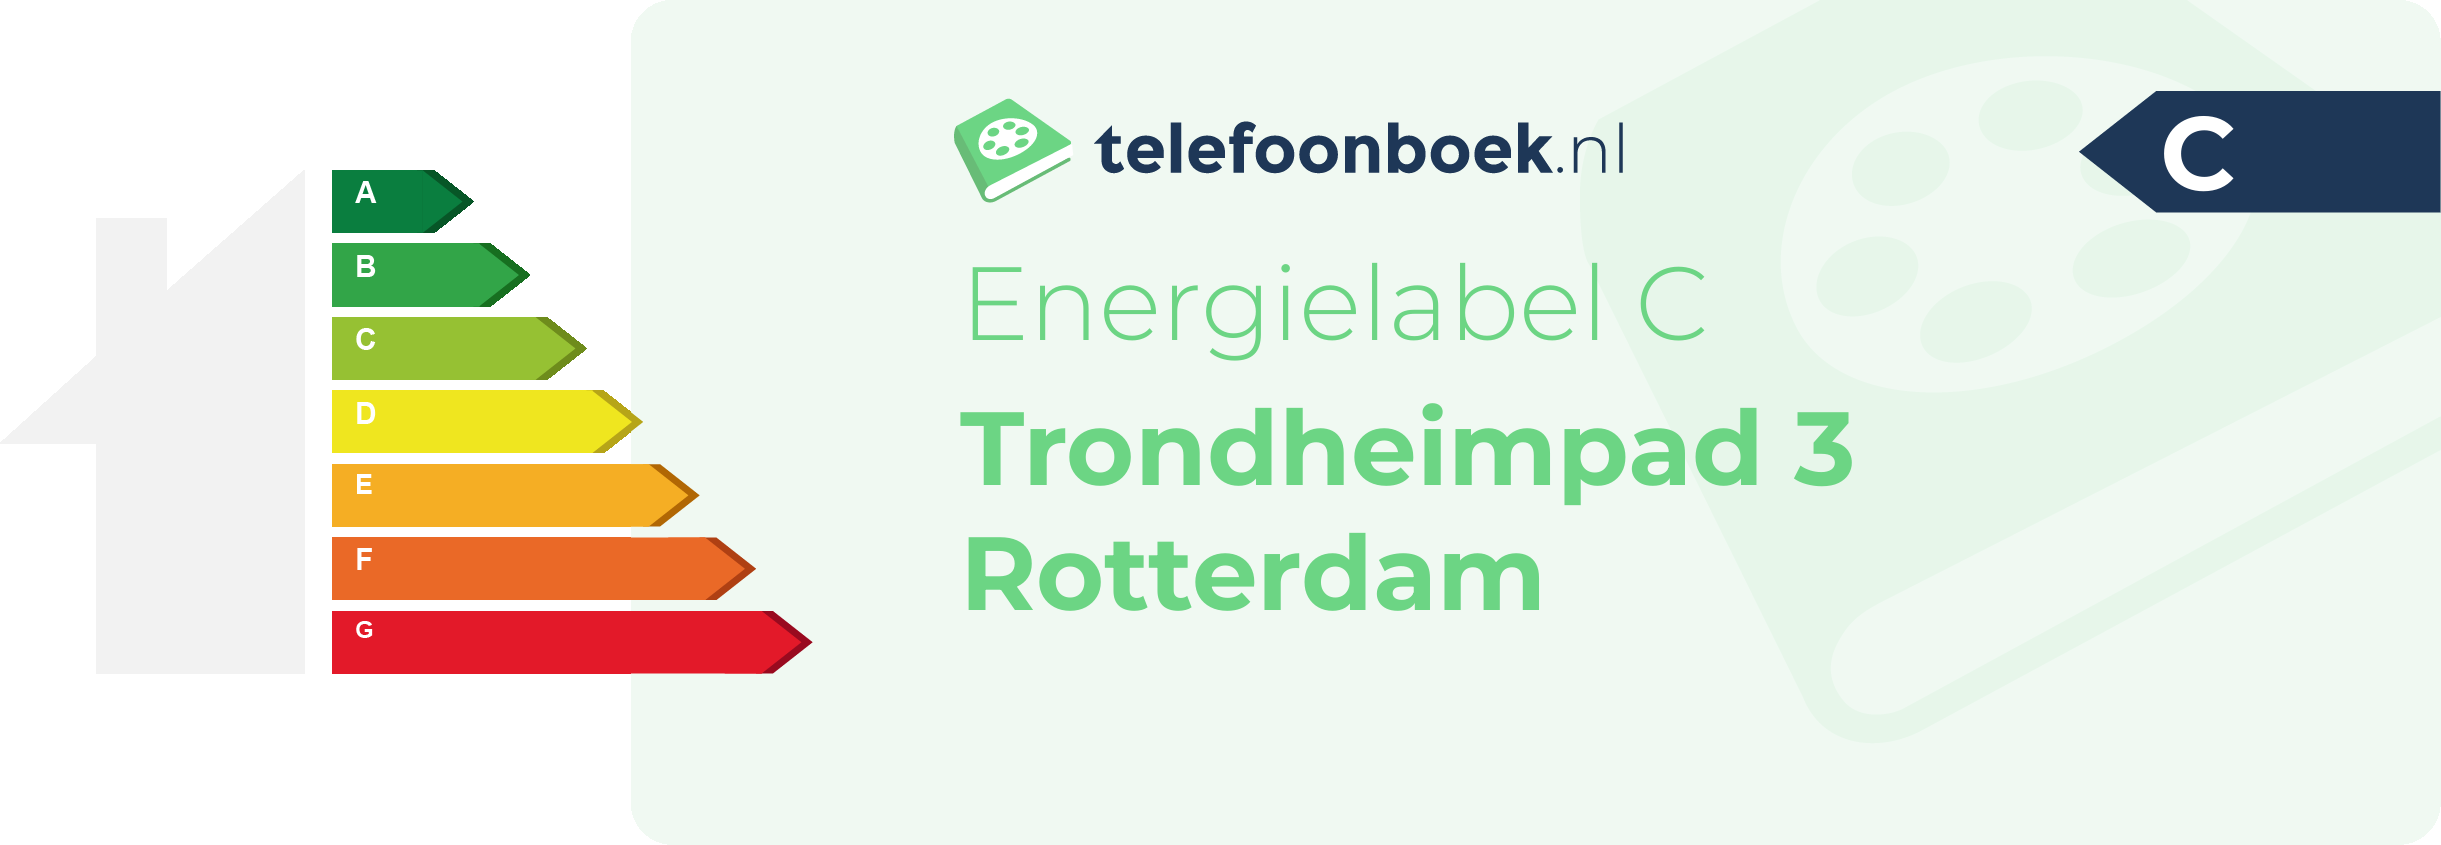 Energielabel Trondheimpad 3 Rotterdam